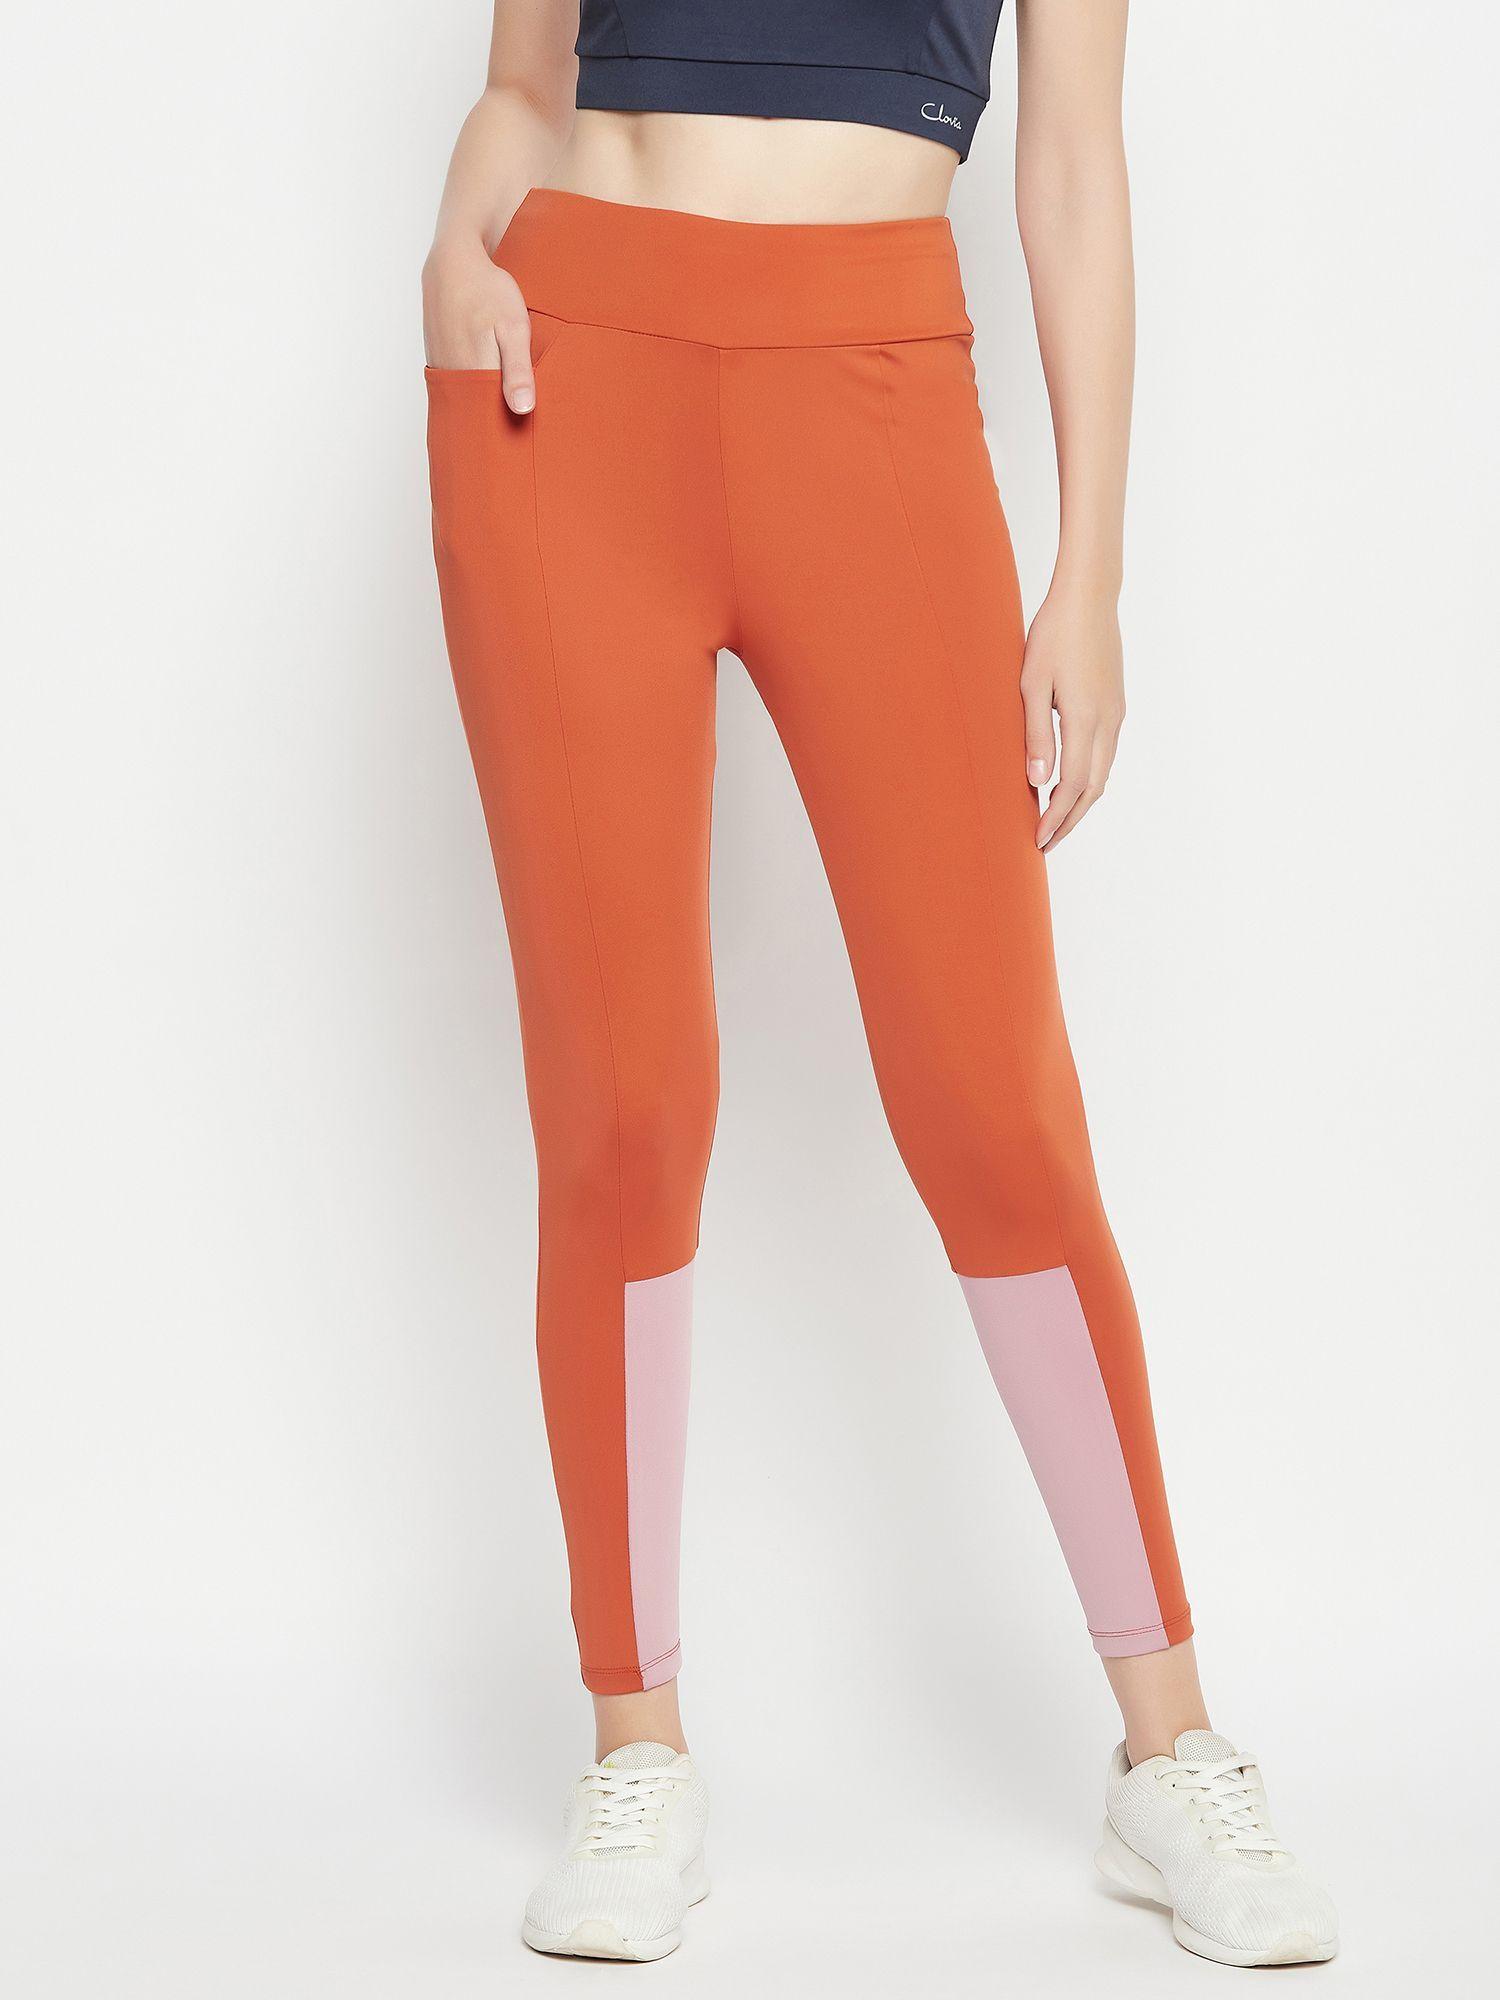 snug-fit high rise colourblocked active tights -orange